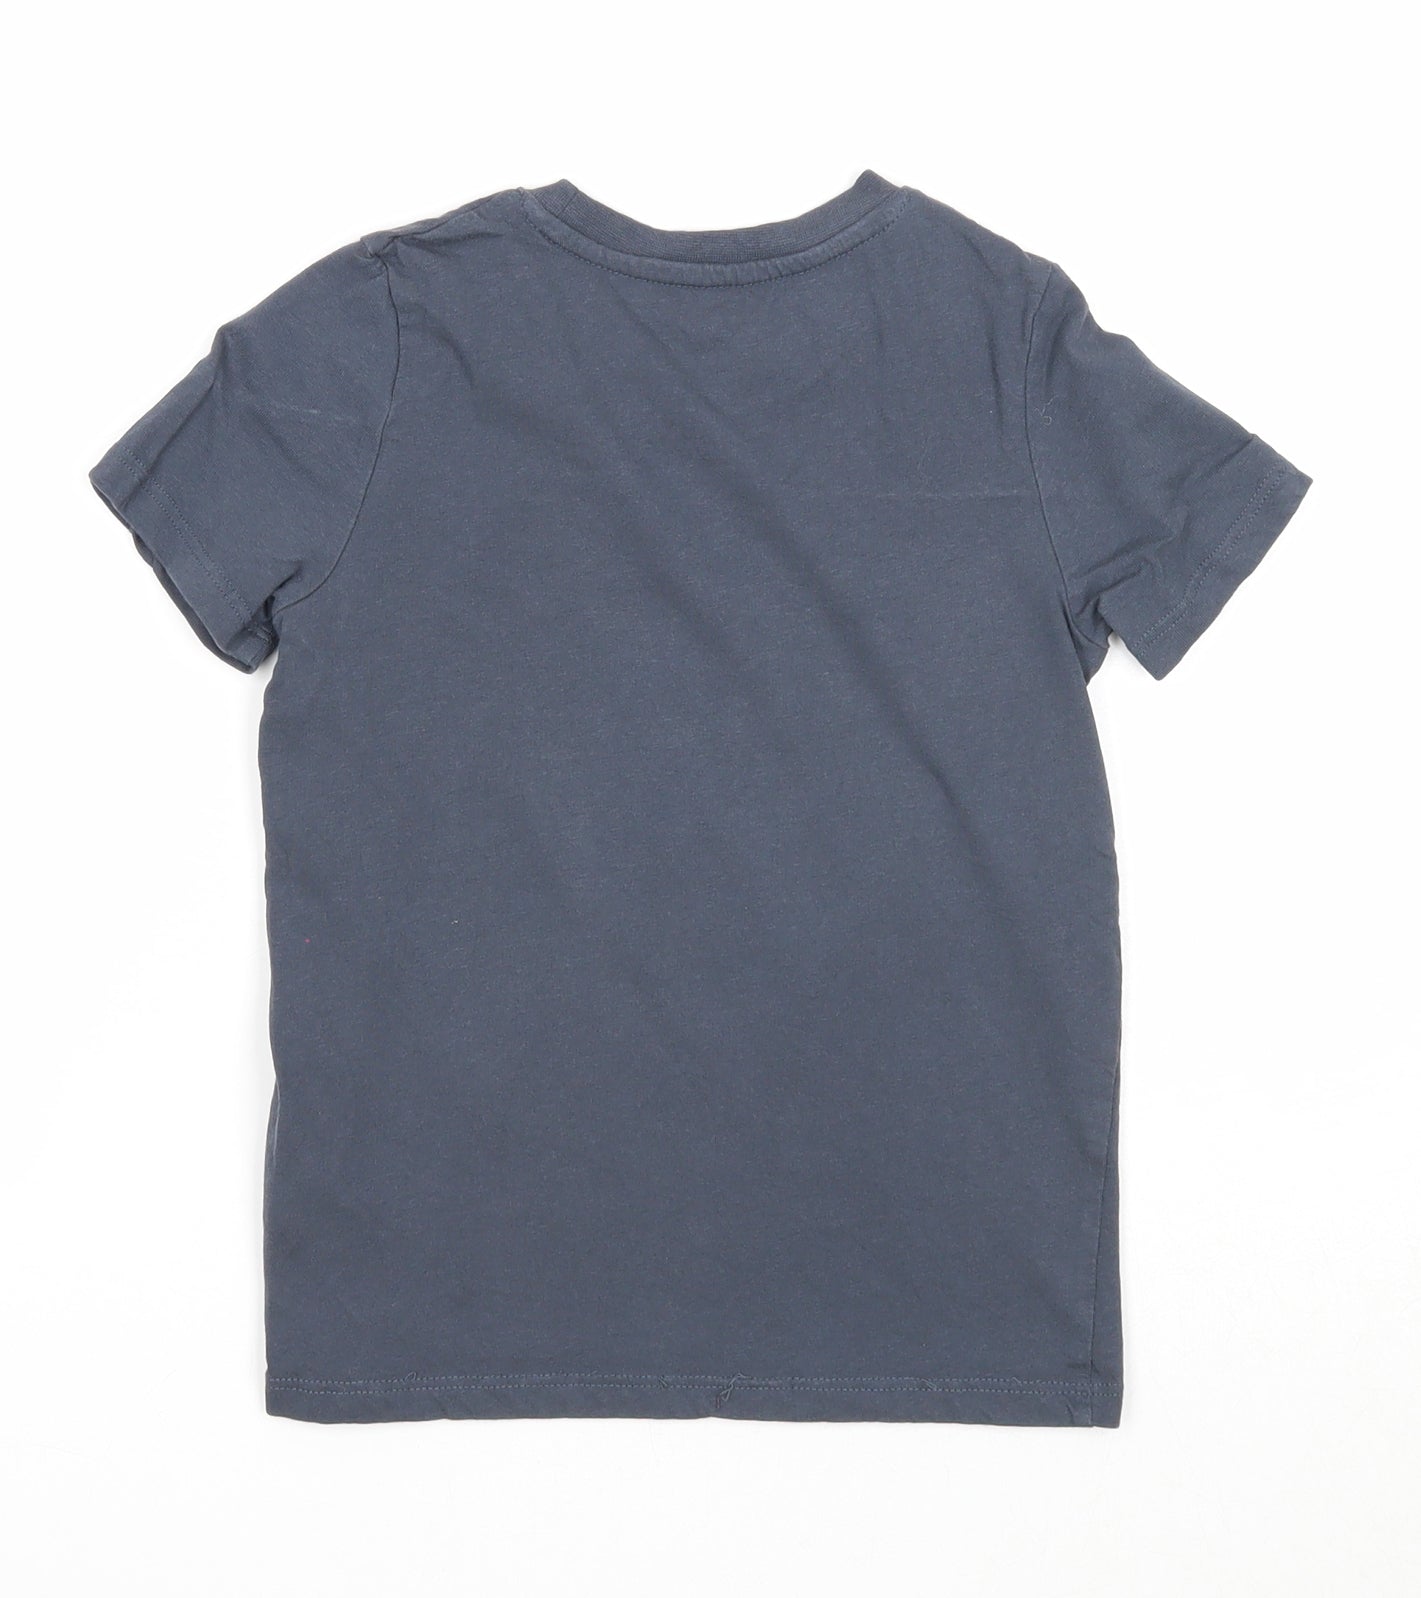 Preworn Boys Blue Cotton Basic T-Shirt Size 6 Years Round Neck Pullover - 84 USA Flag